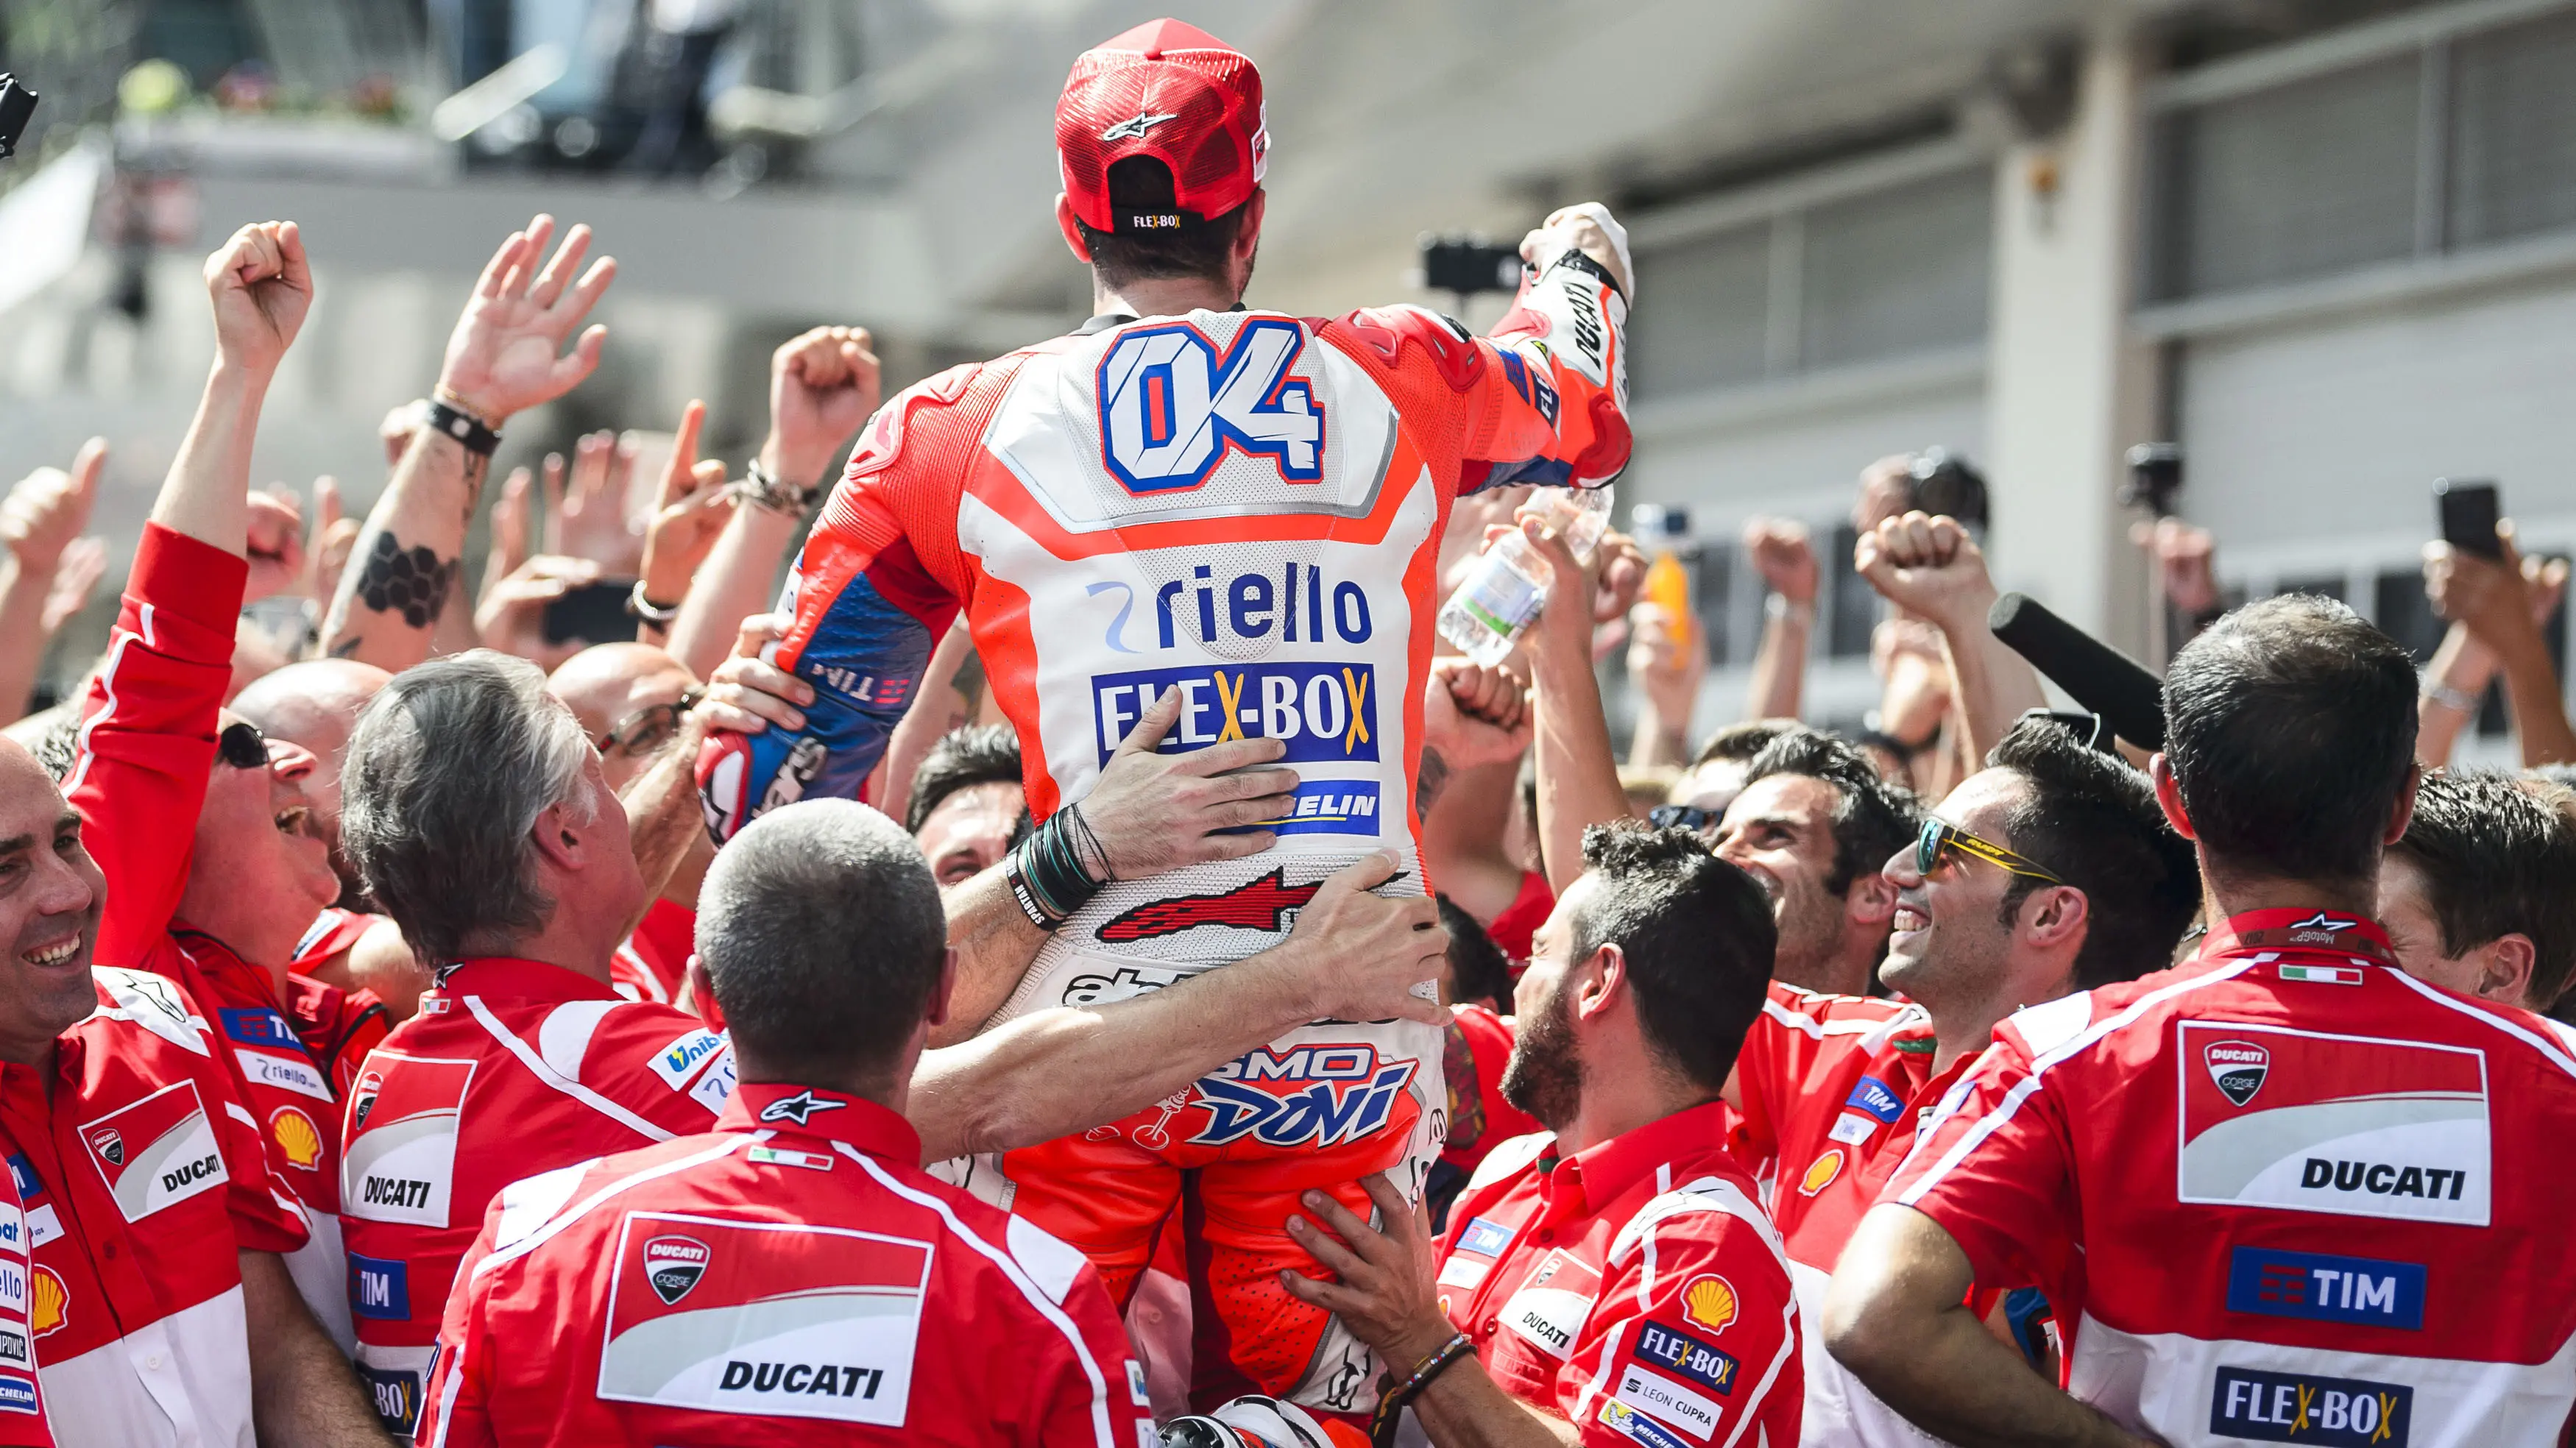 Andrea Dovizioso (tengah) merayakan kemenangan bersama tim usai balapan MotoGP Austria di Red Bull Ring, Spielberg, Austria (13/8/2017). Dovizioso menjadi juara stelah kalahkan Marquez pada lap terakhir. (AFP/Jure Makovec)